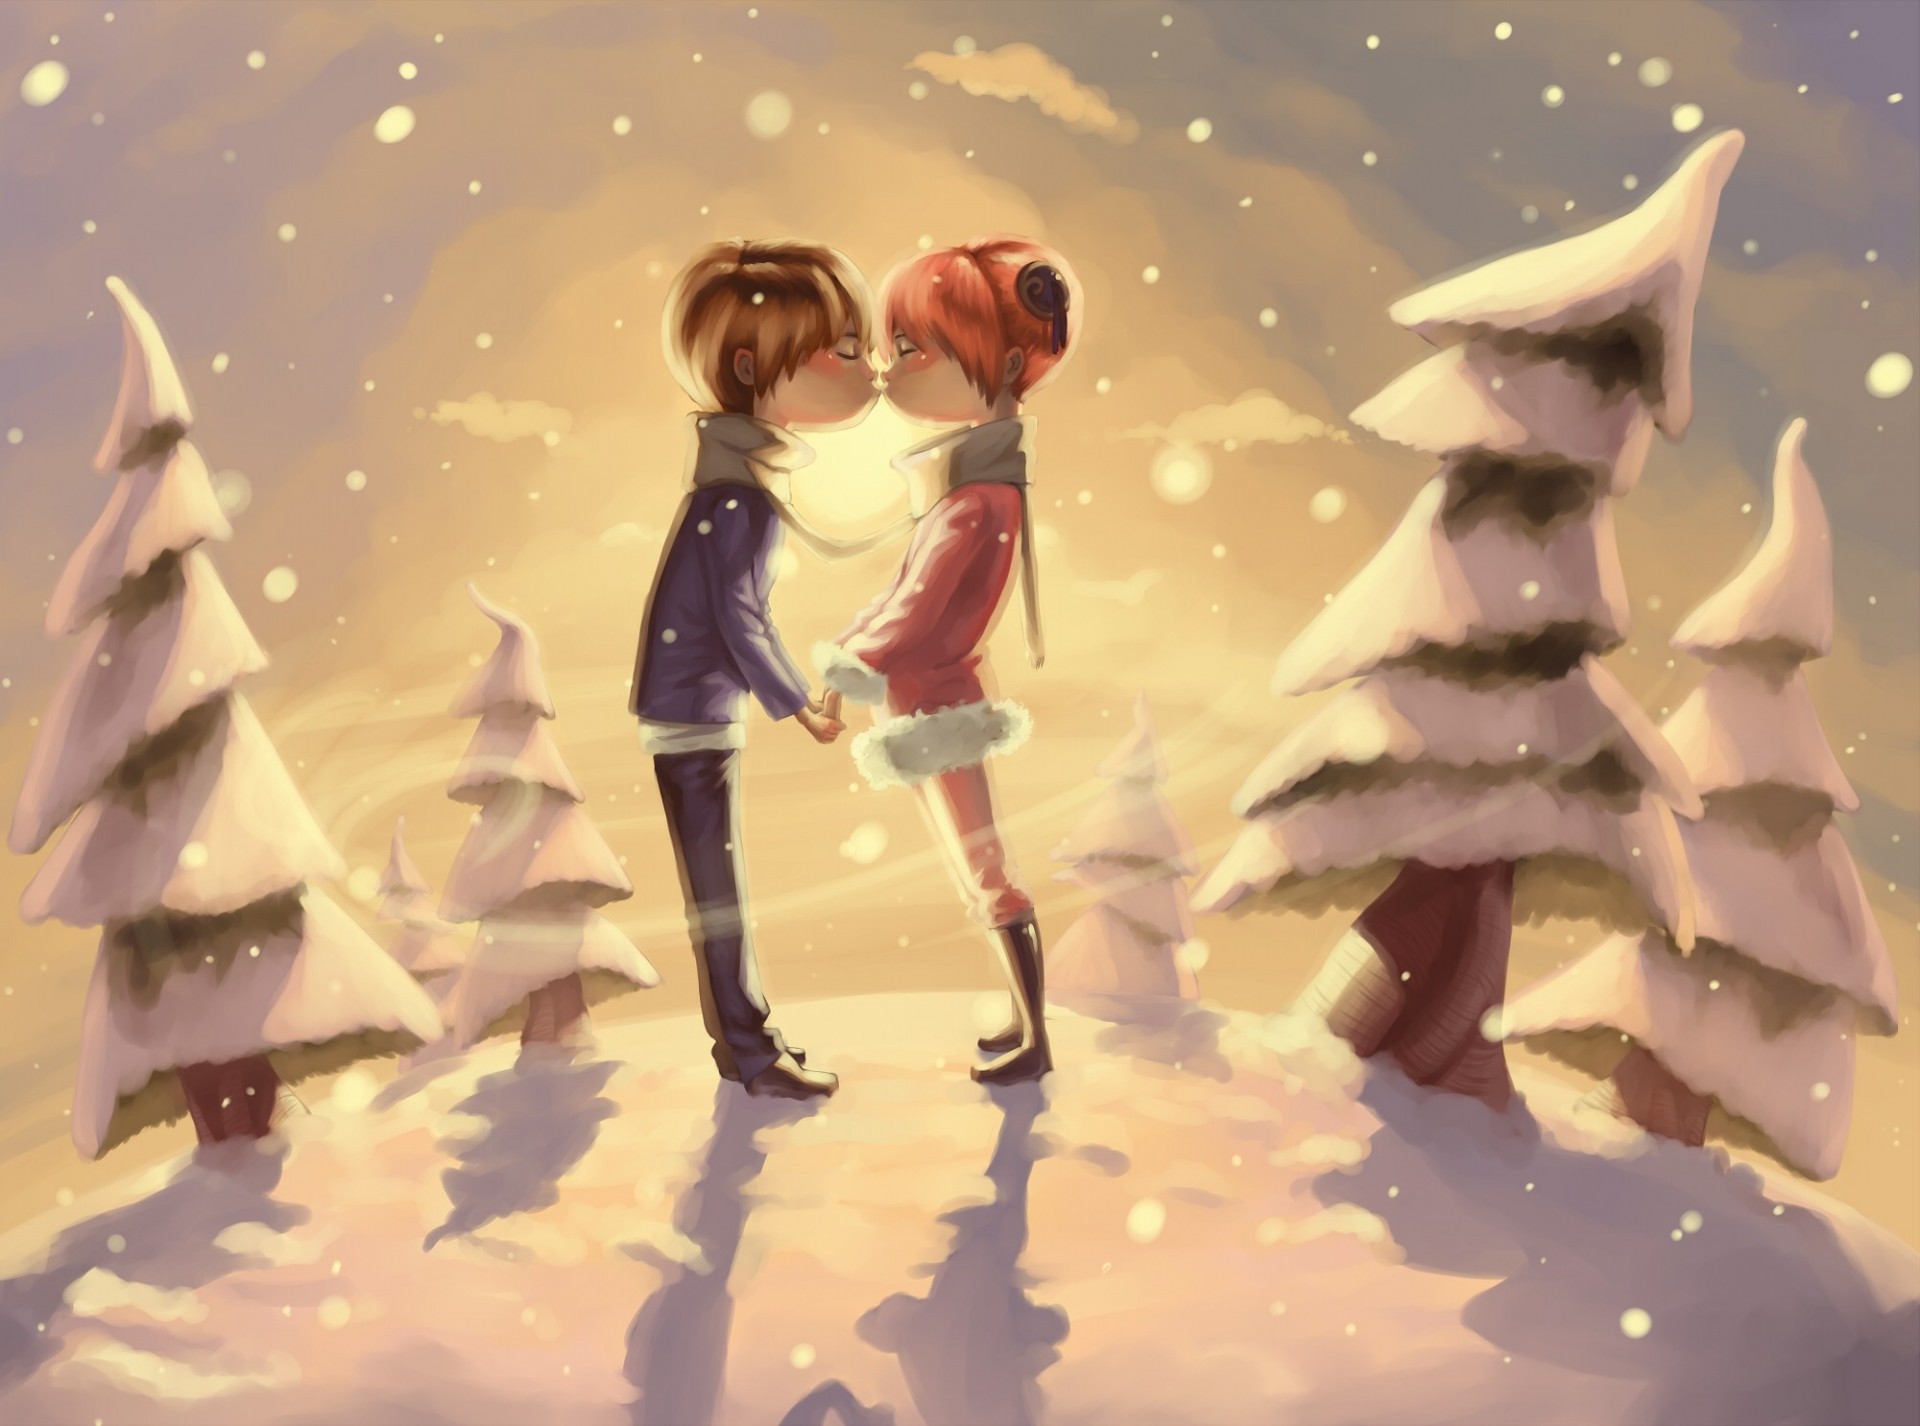 романтика деревья снег пара поцеловать зима